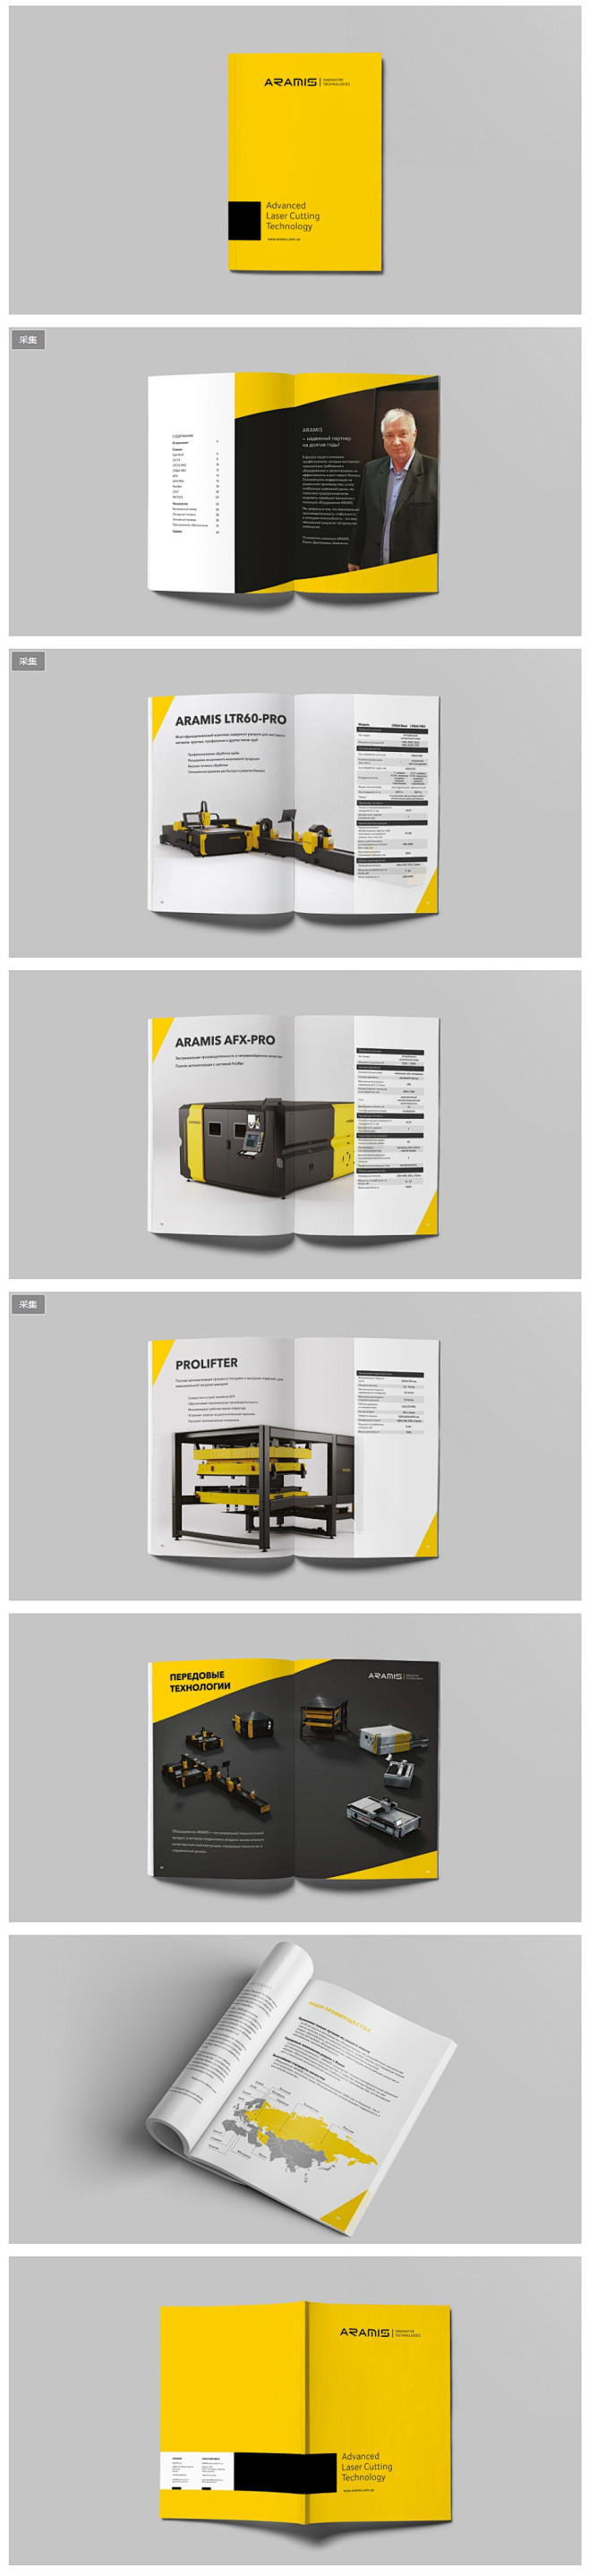 ARAMIS机械产品画册设计 - 设计之...